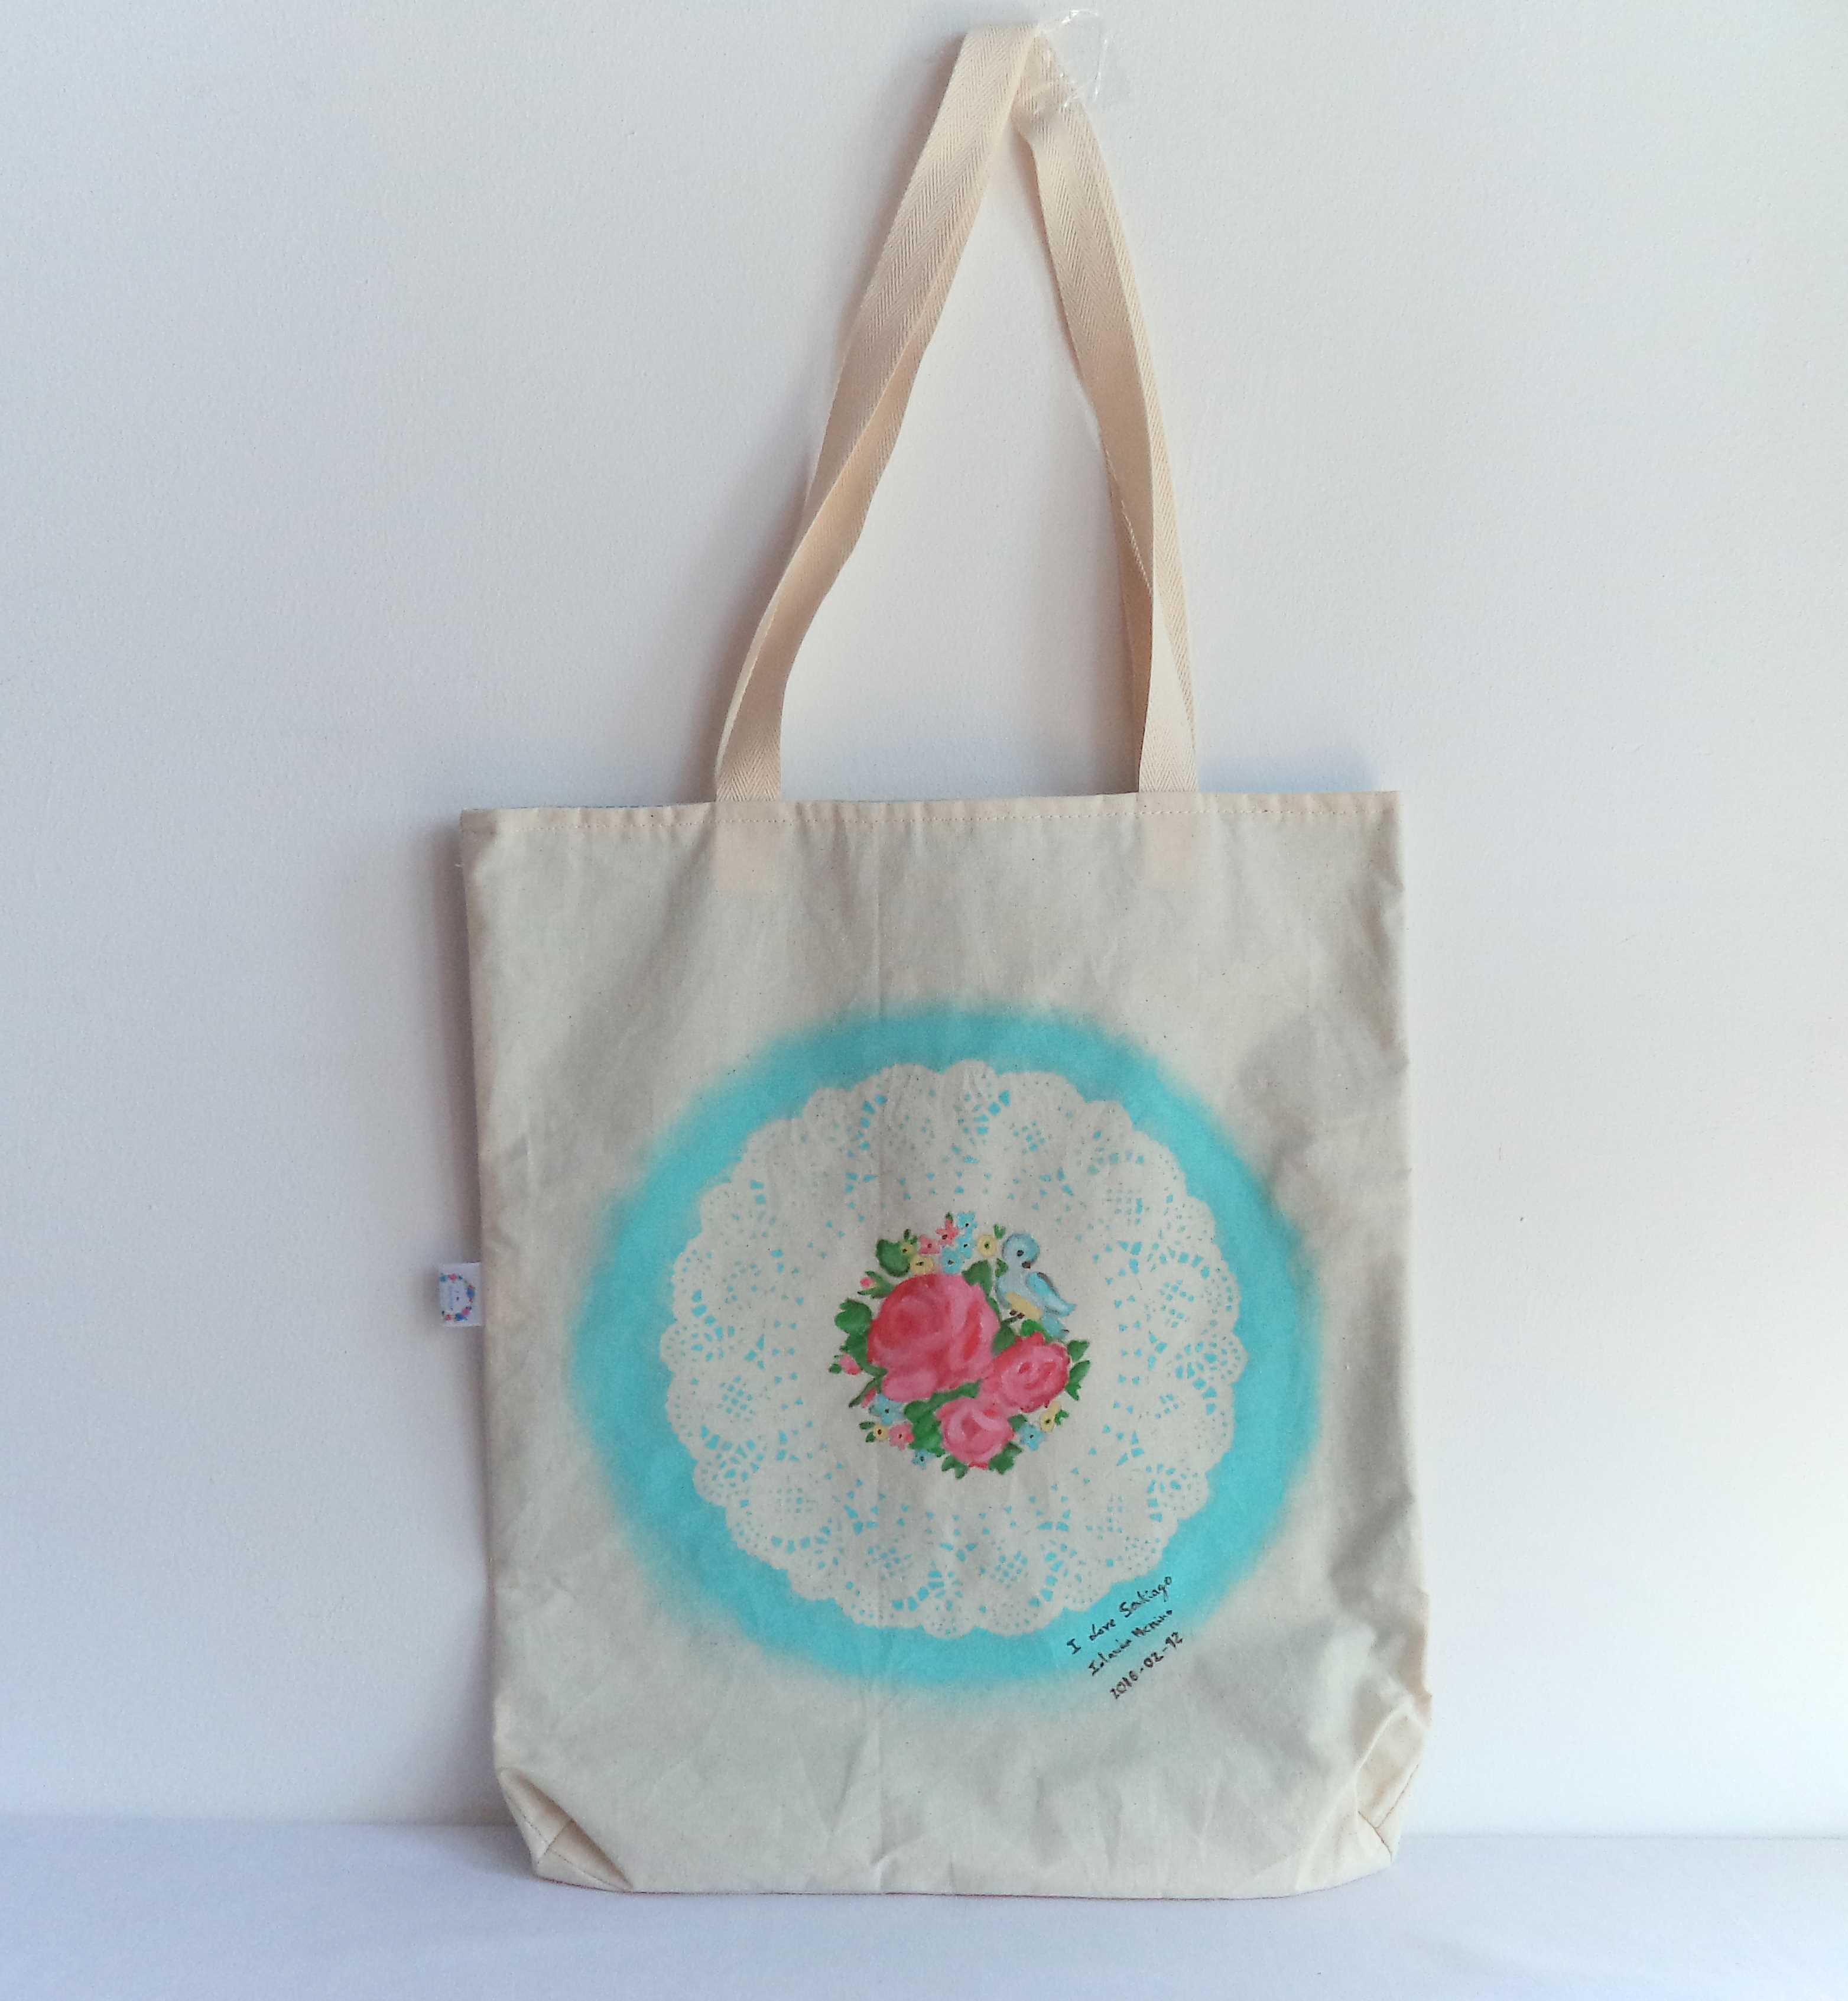 Hand-Painted Tote Bags - :Iolanda :Menino.